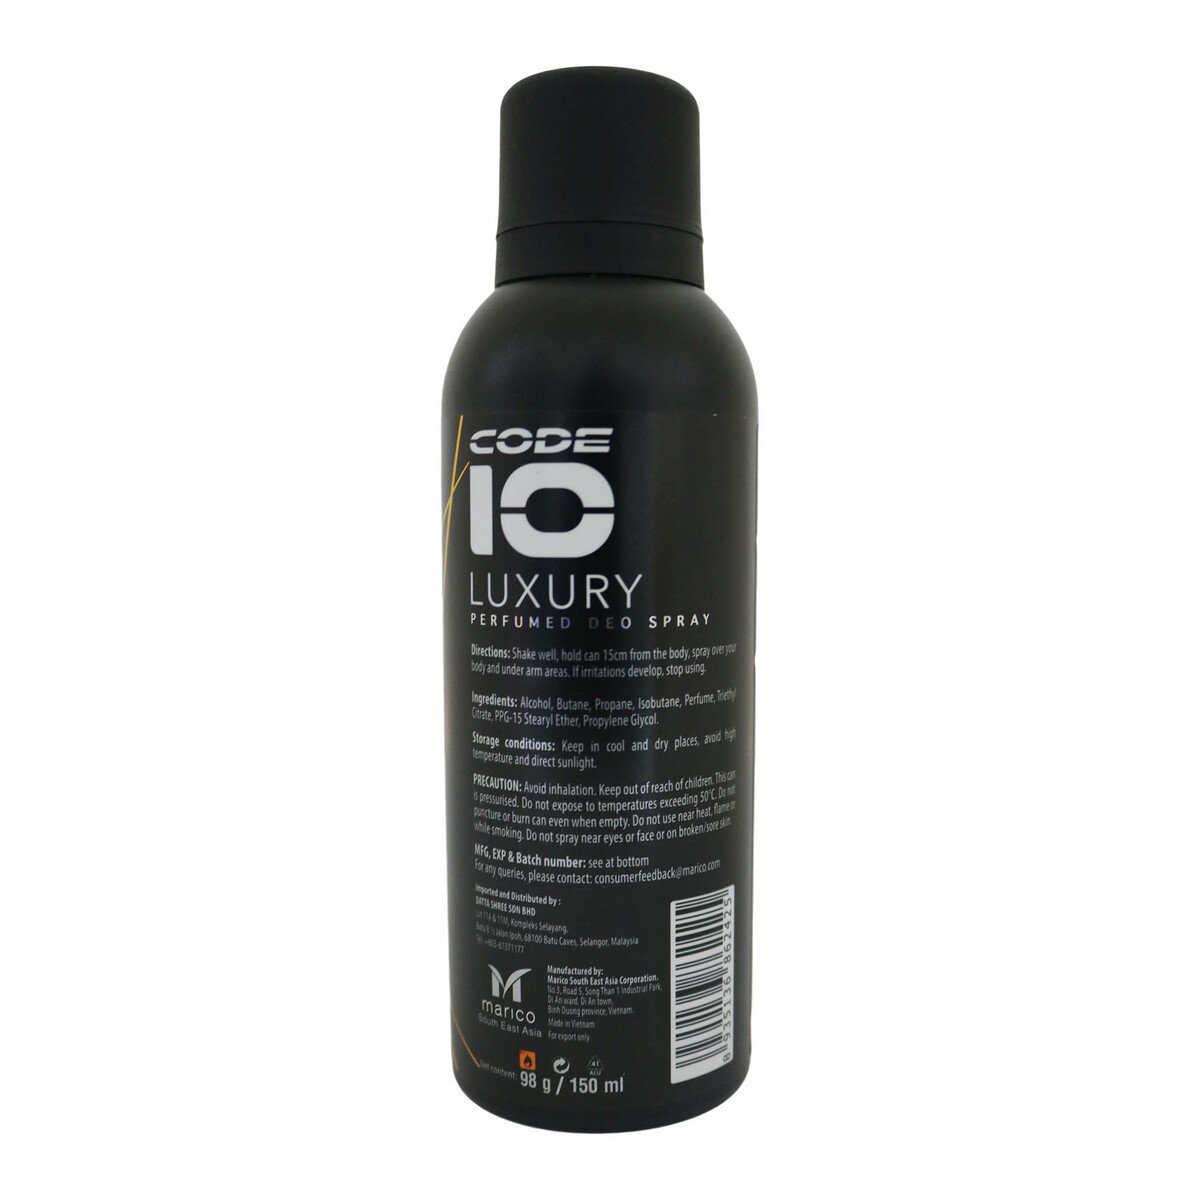 Code 10 Perfume Luxury Deodorant Spray 150ml